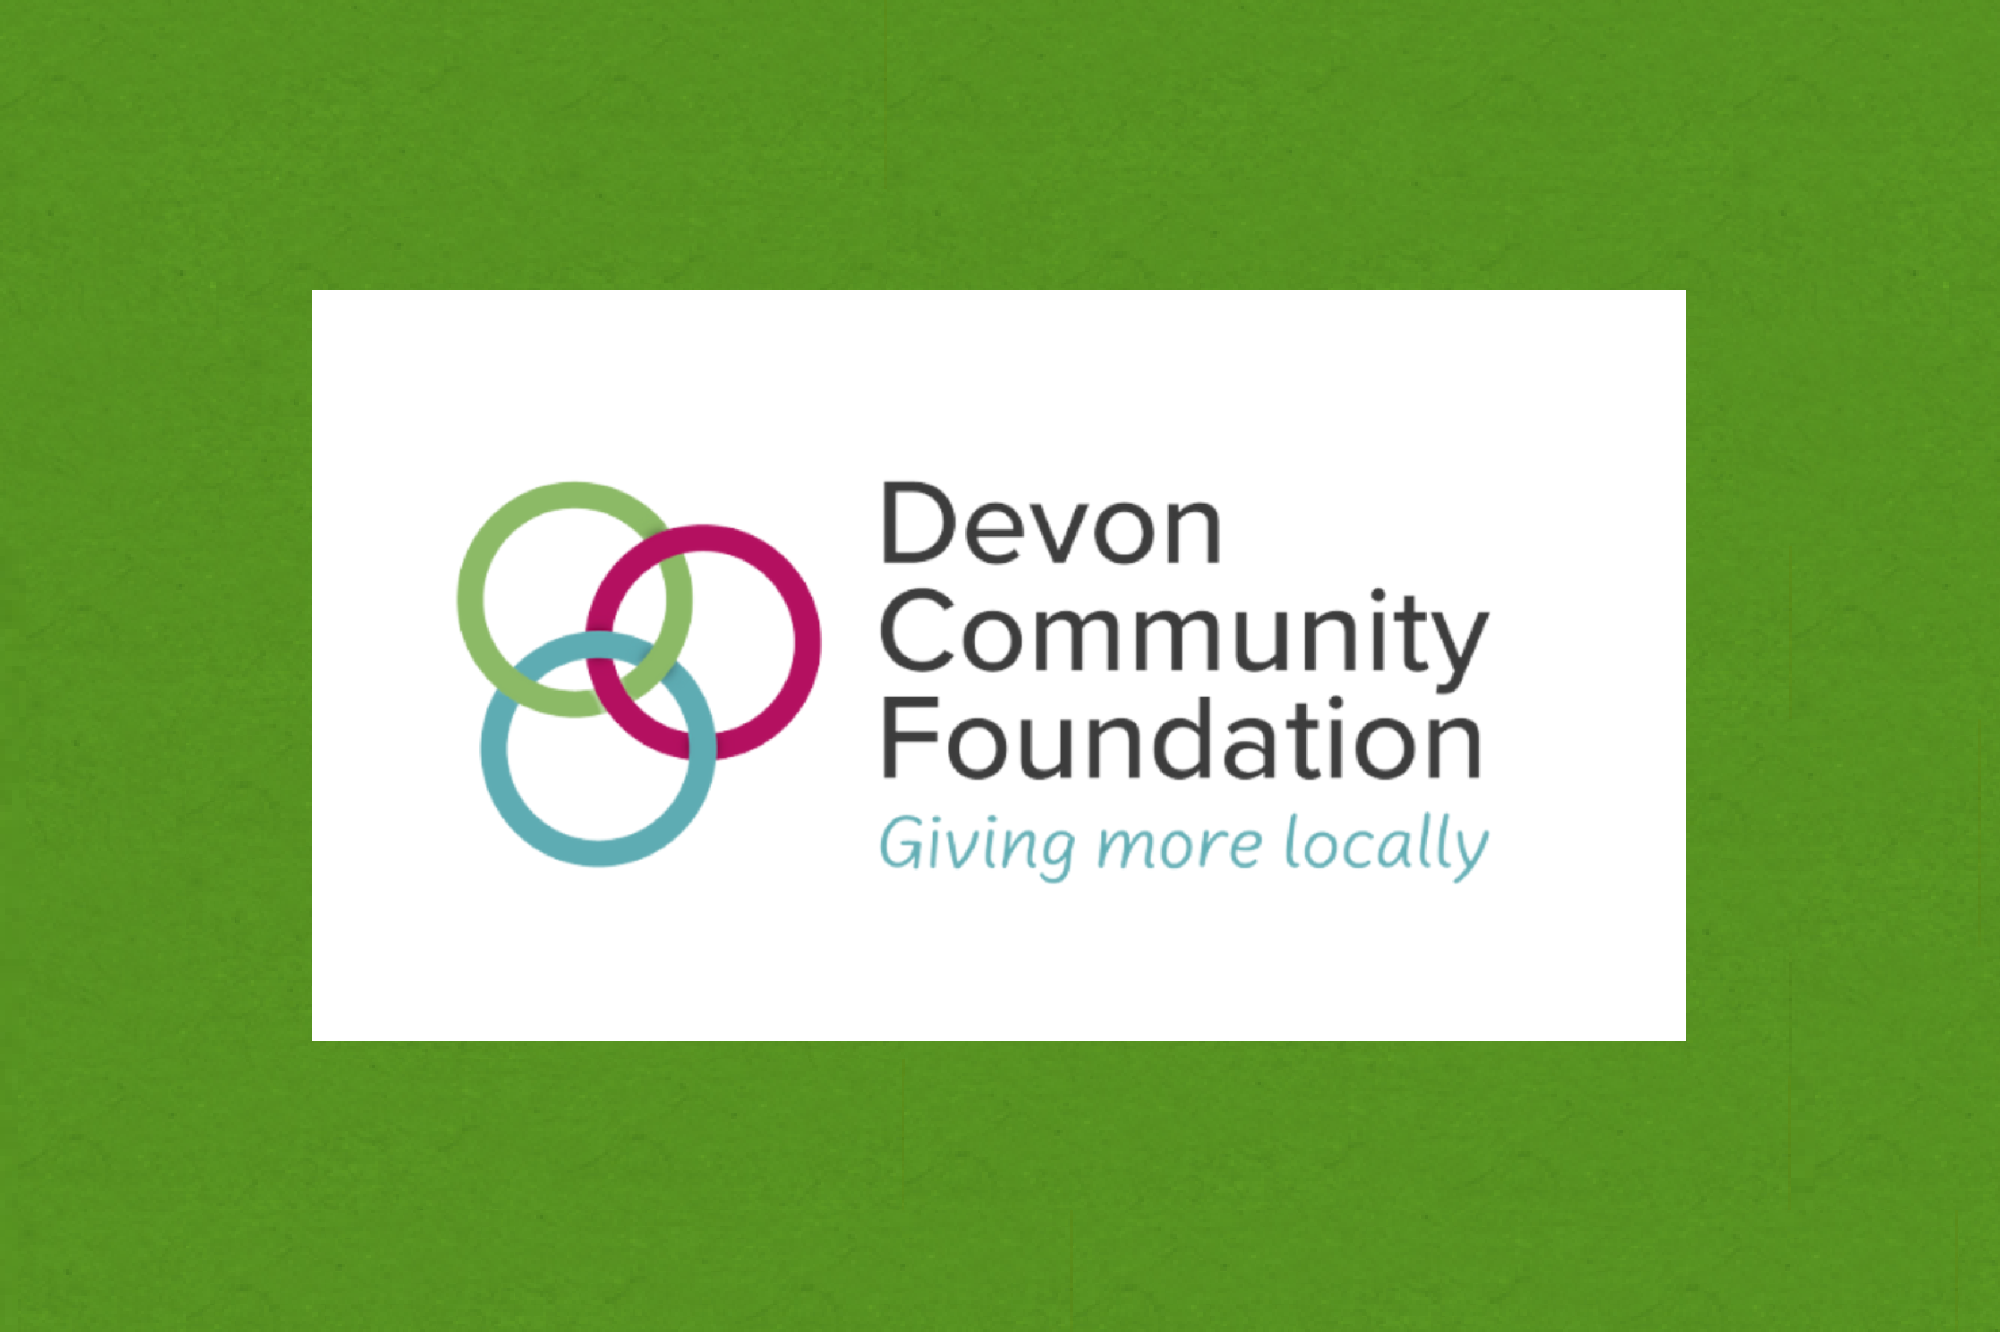 Crisp Professional Development supporting Devon Community Foundation